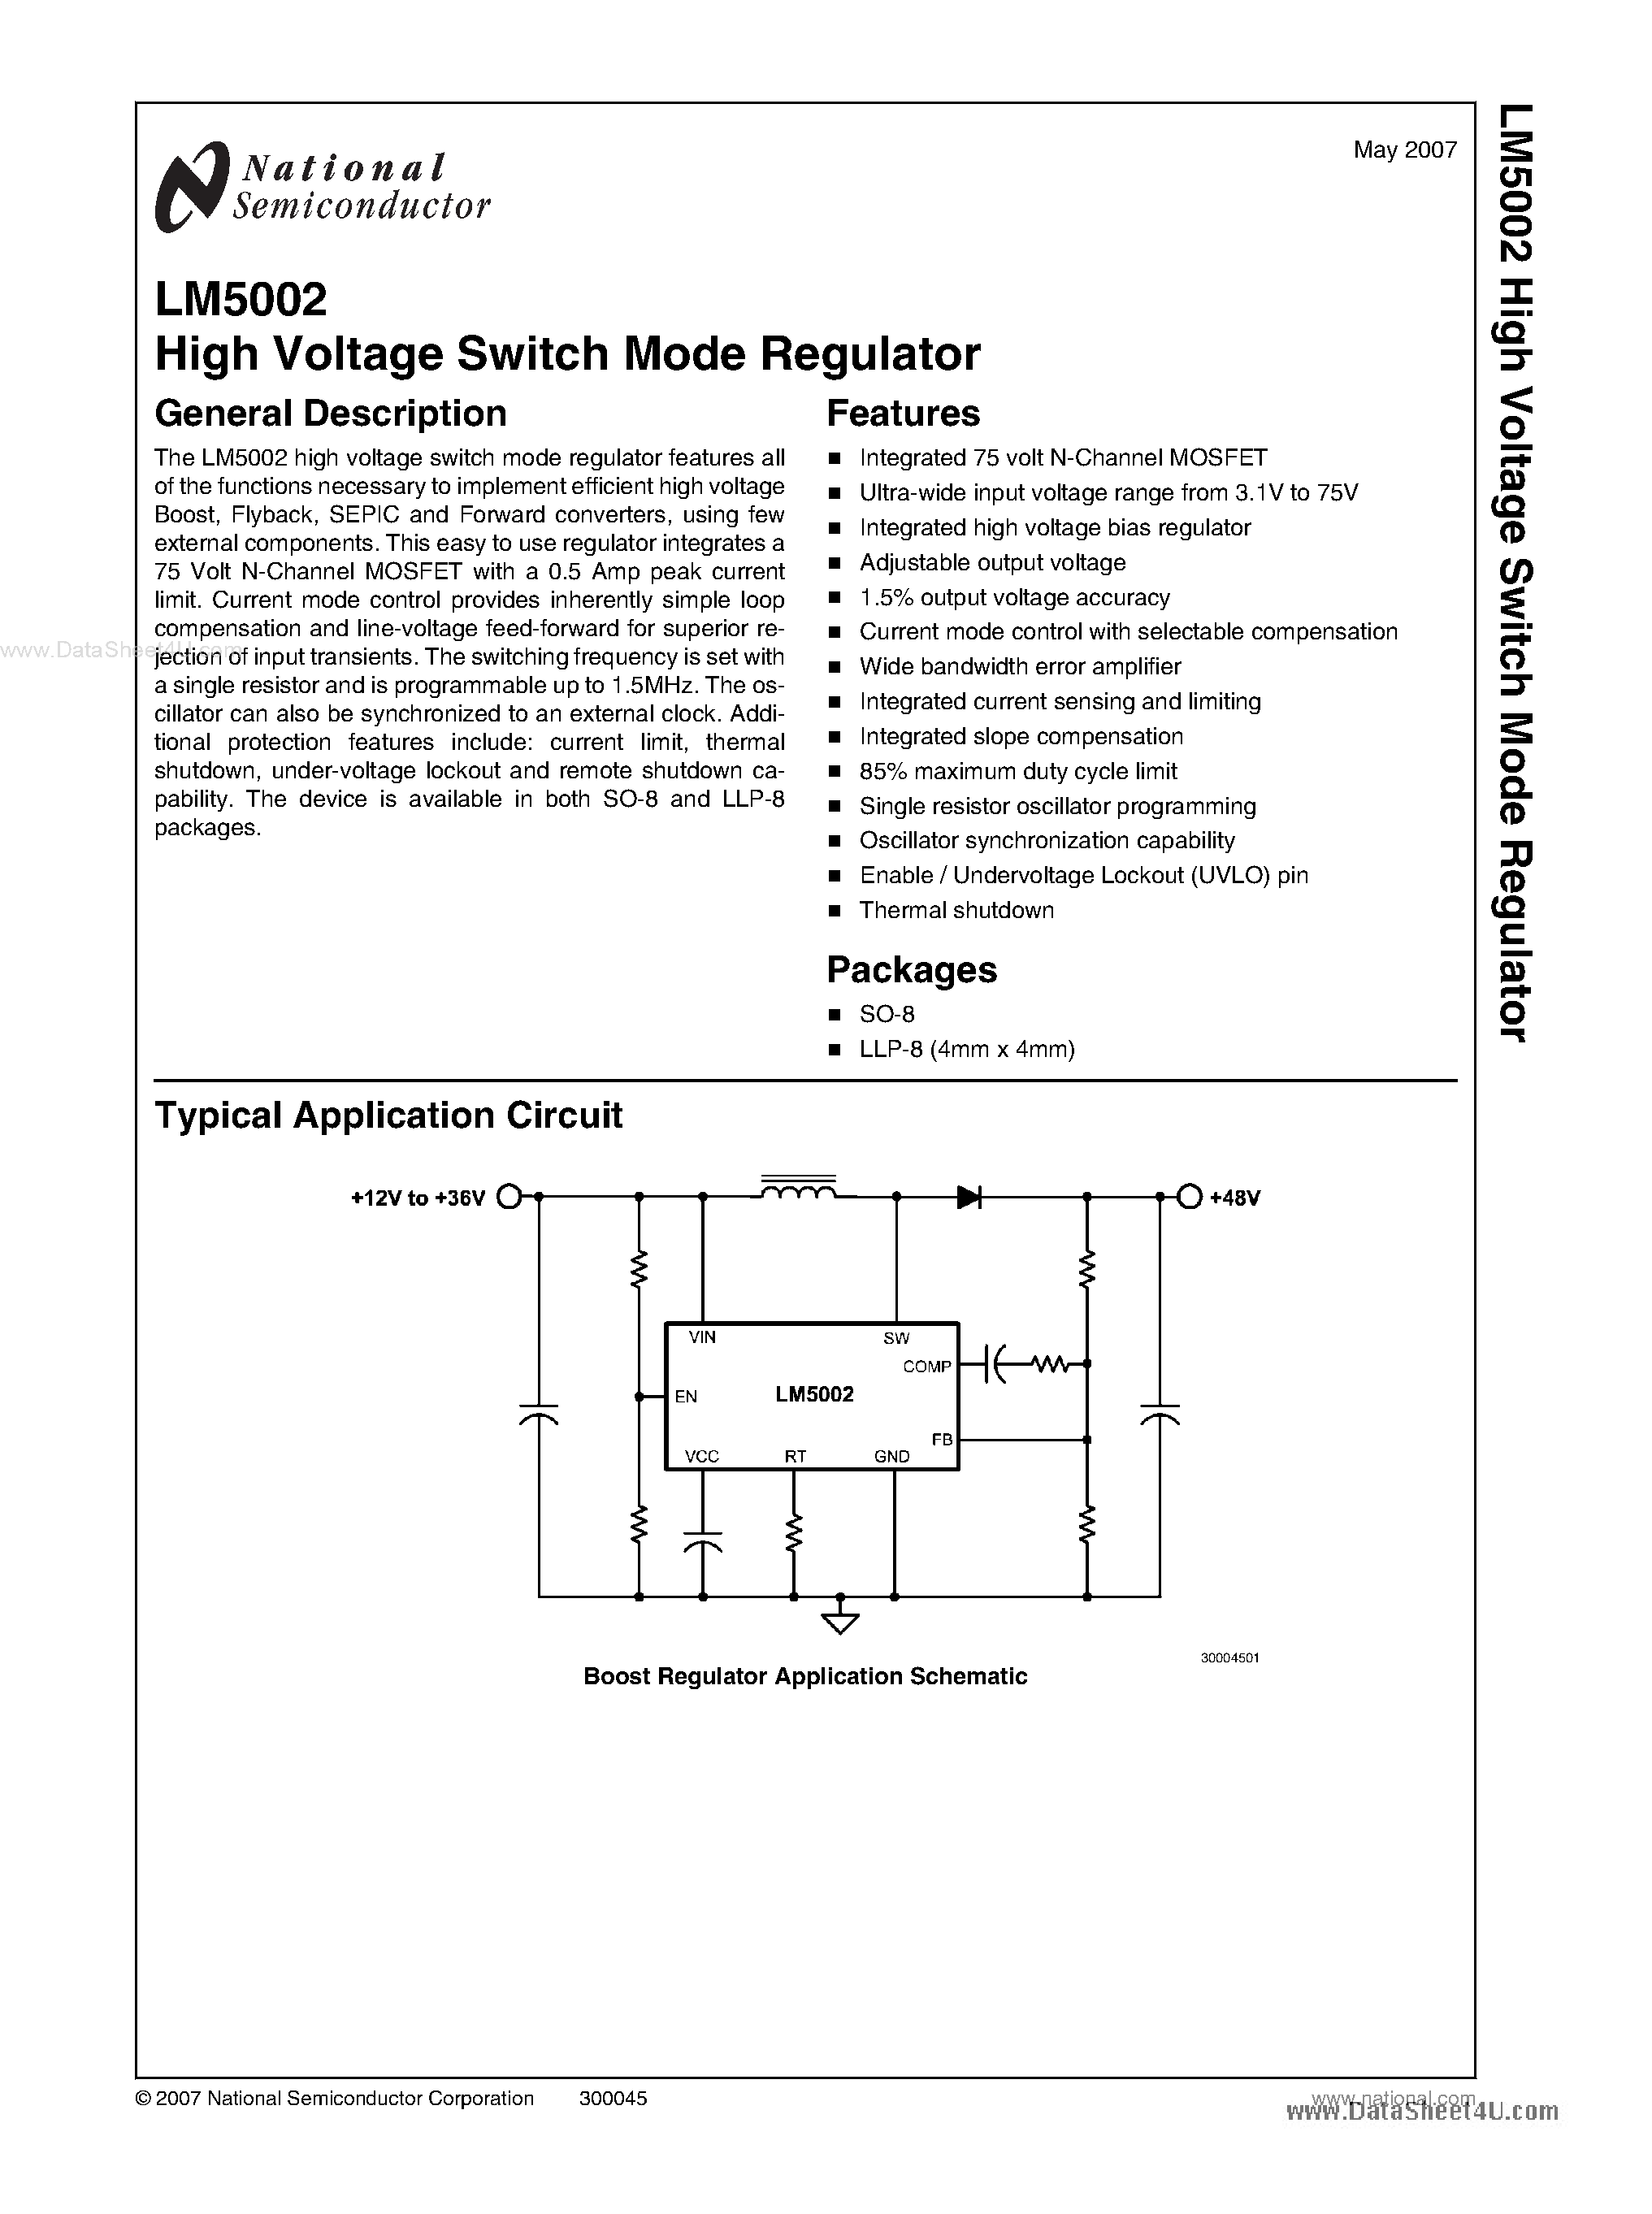 Datasheet LM5002 - High Voltage Switch Mode Regulator page 1